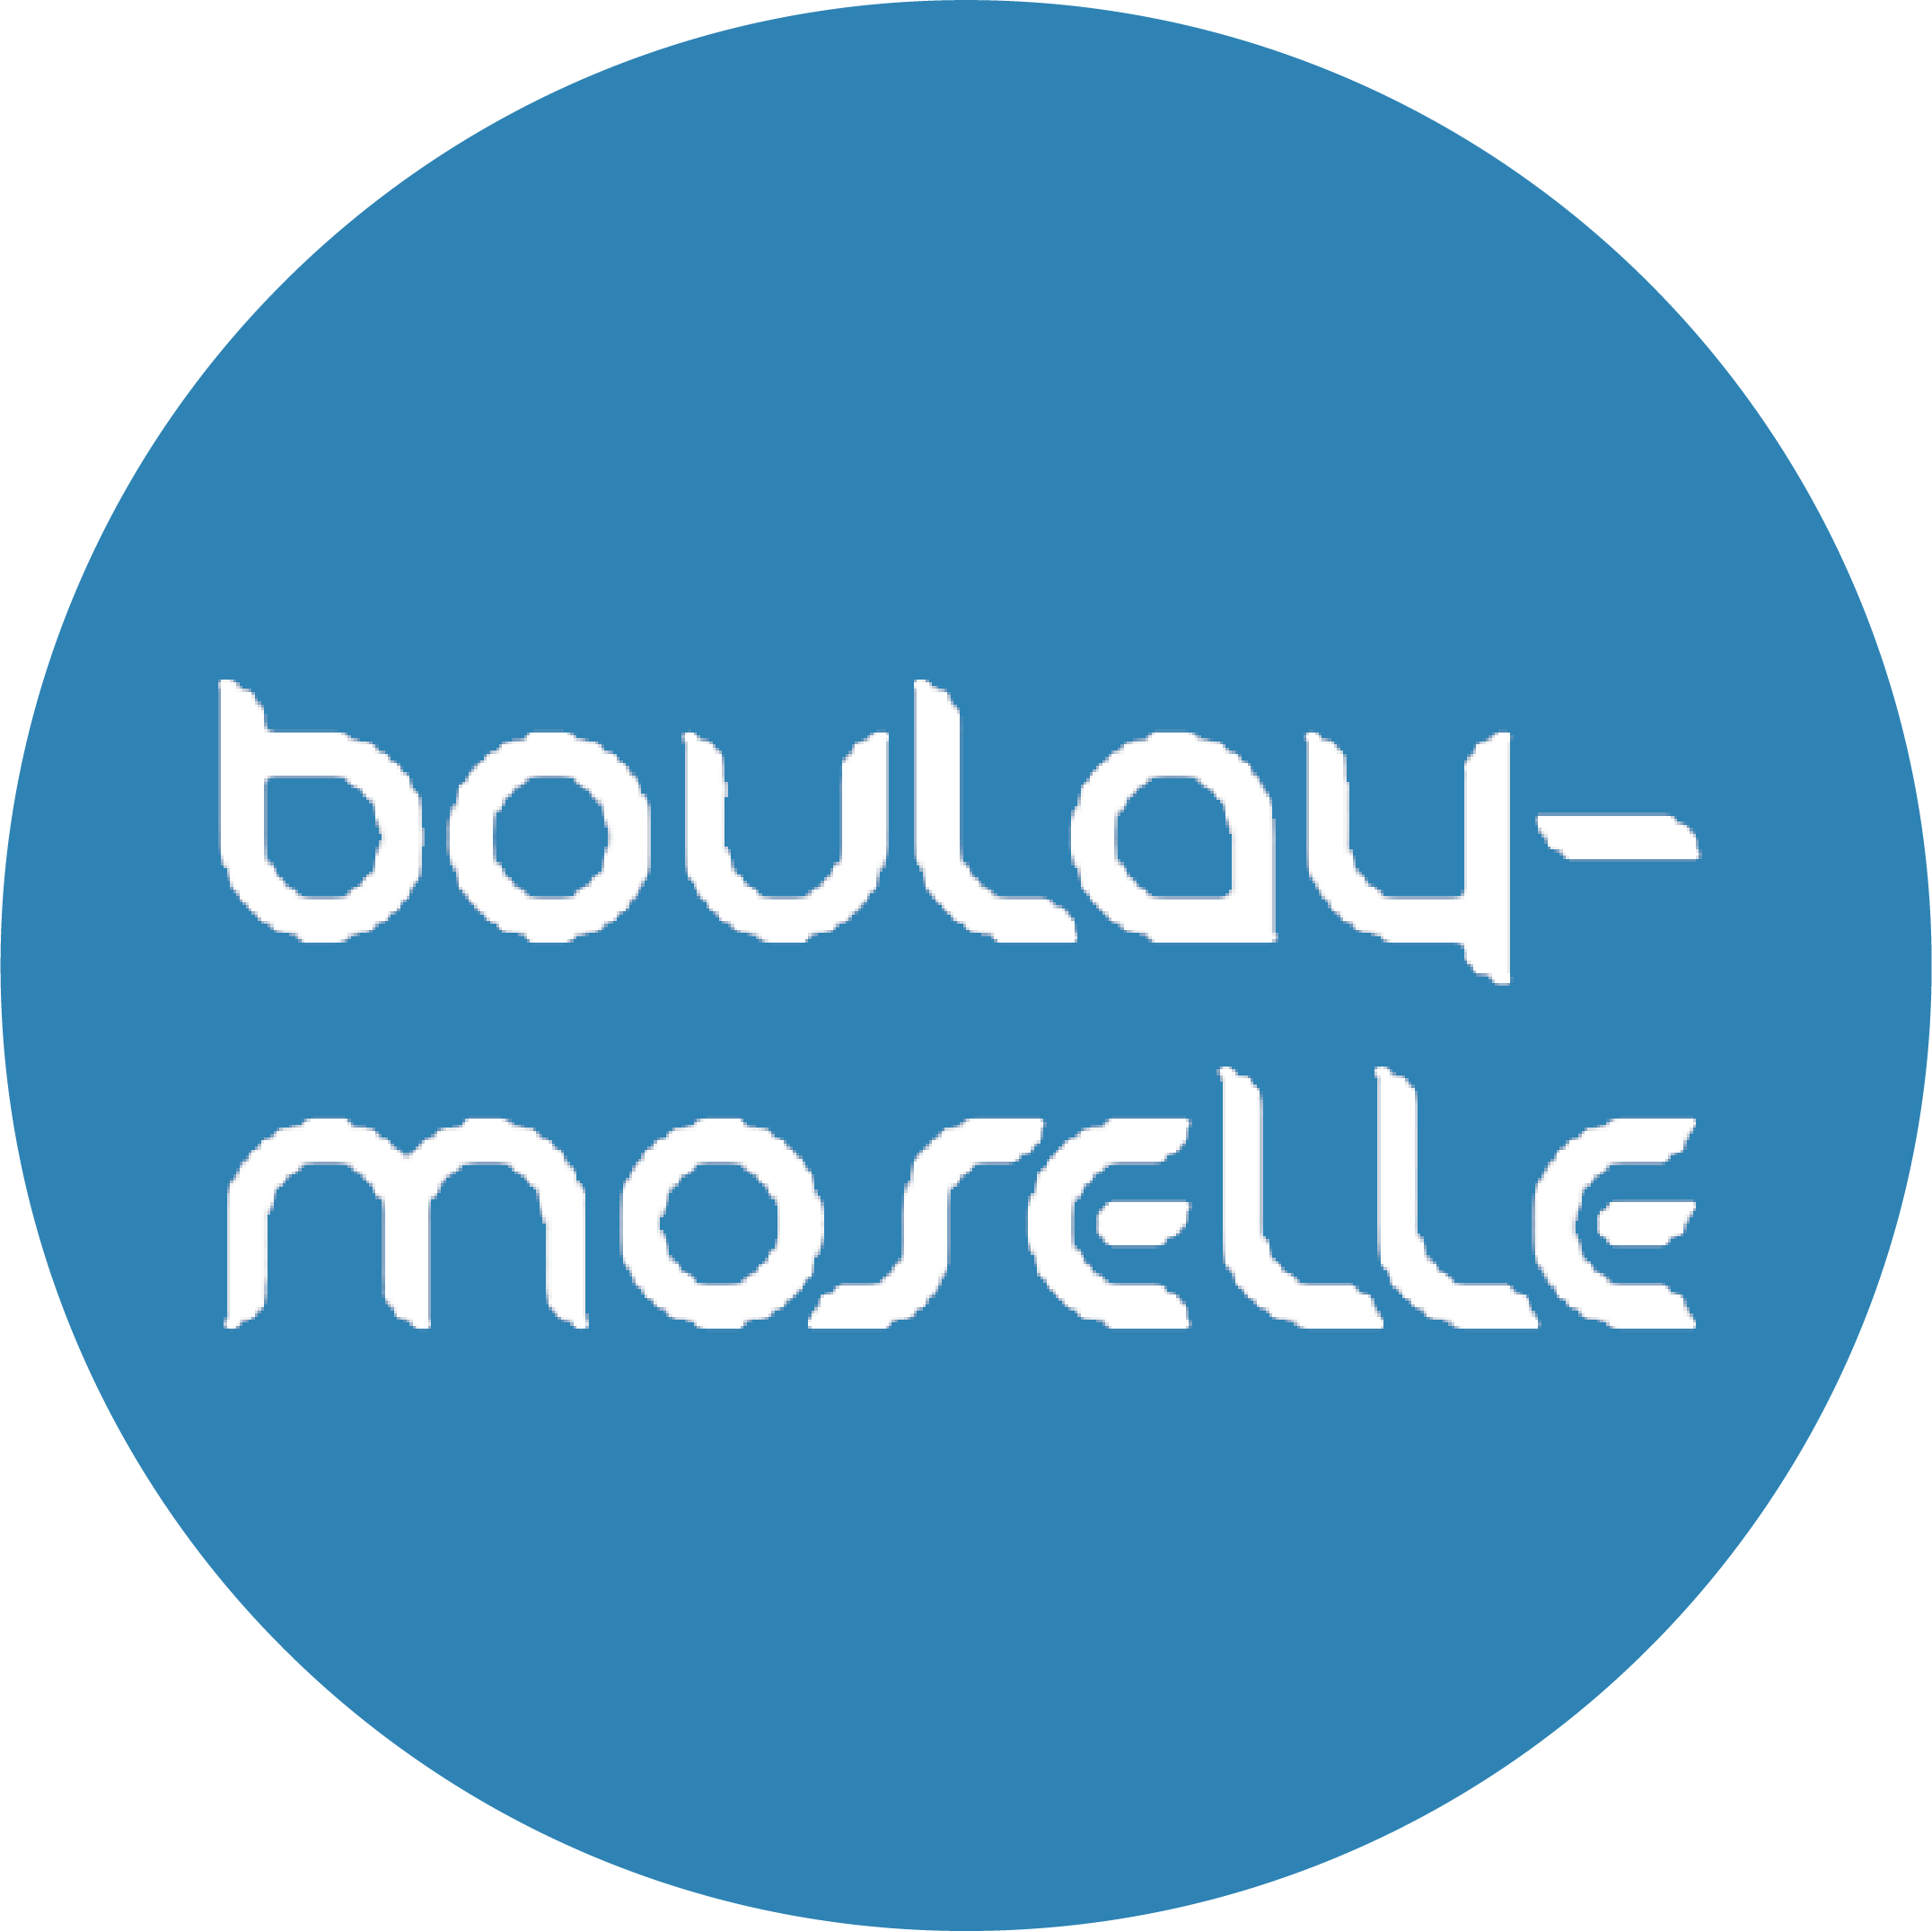 Ville de Boulay-Moselle